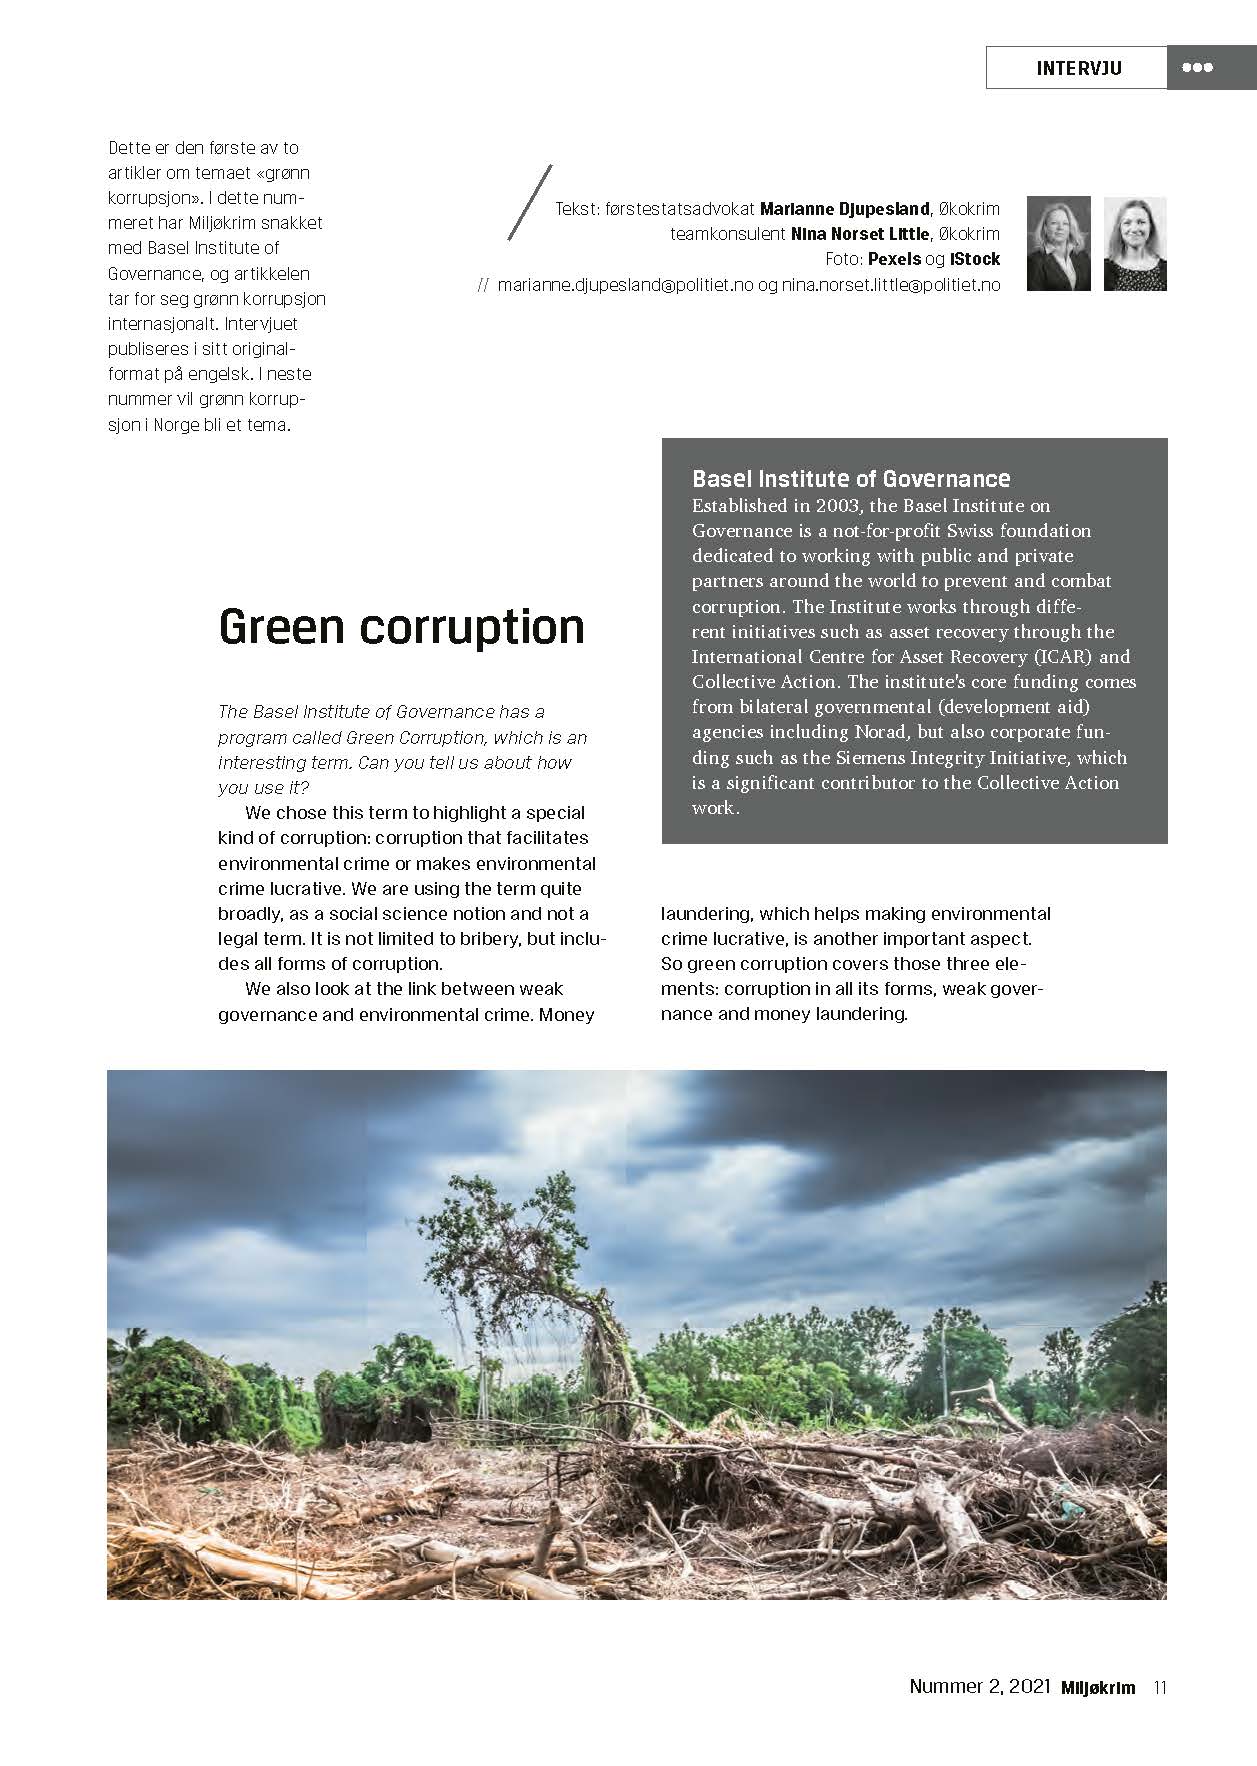 Miljøkrim_02.2021 - Green corruption